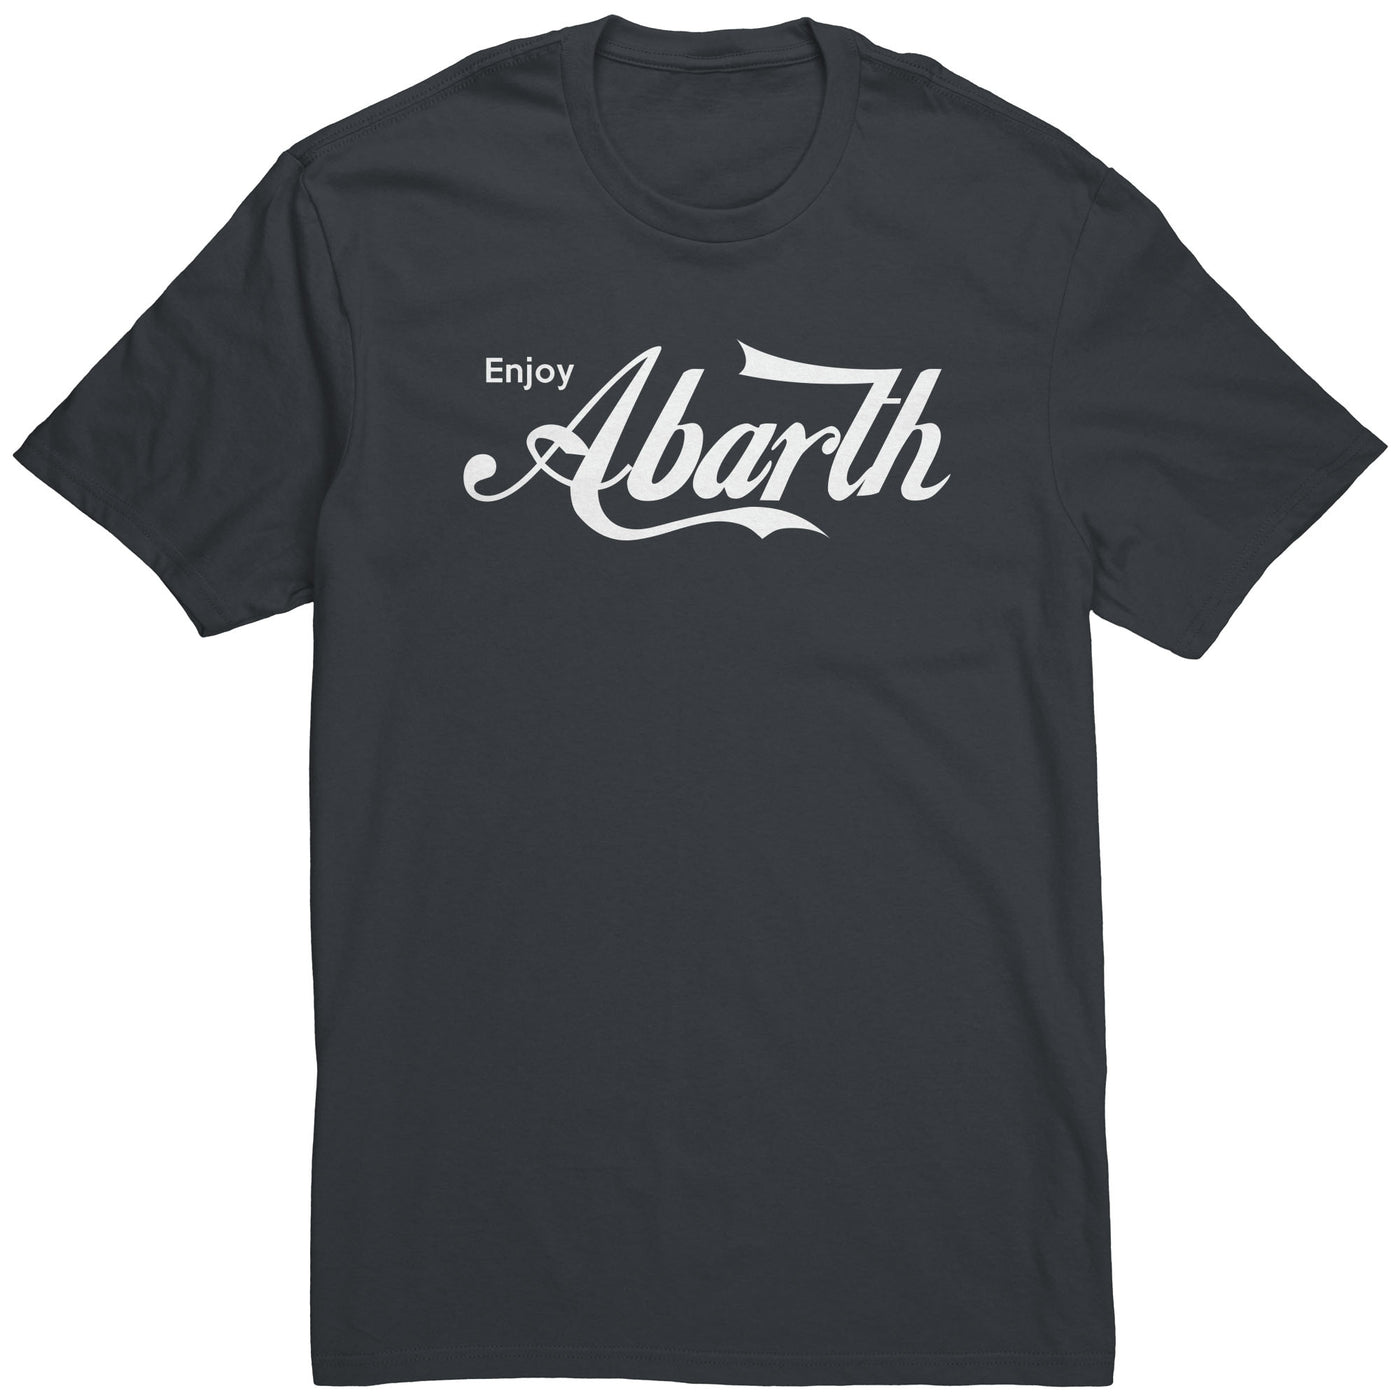 enjoy-abarth-shirt-charcoal